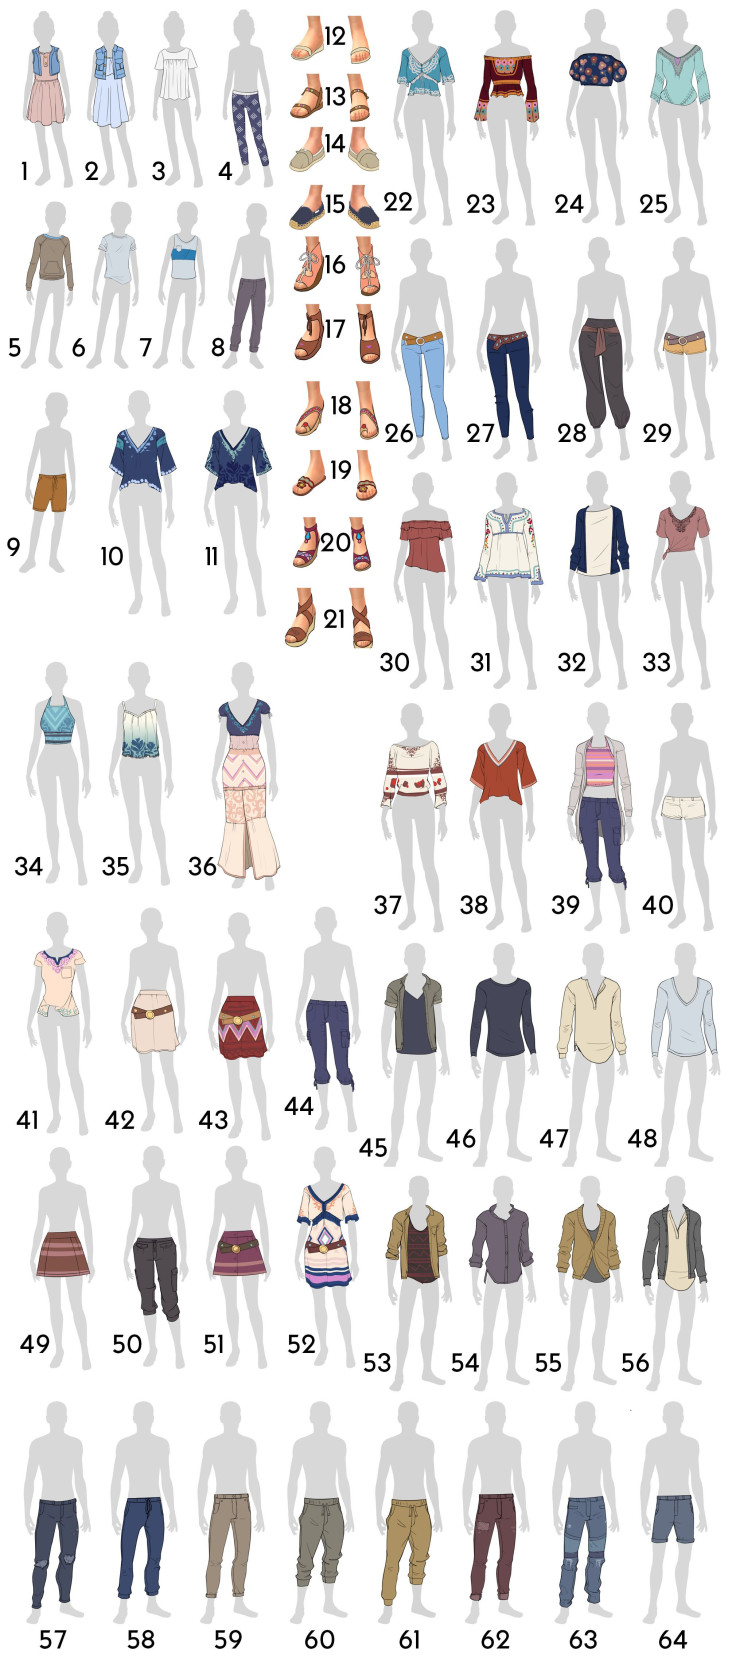 Choose 14 clothing items. 